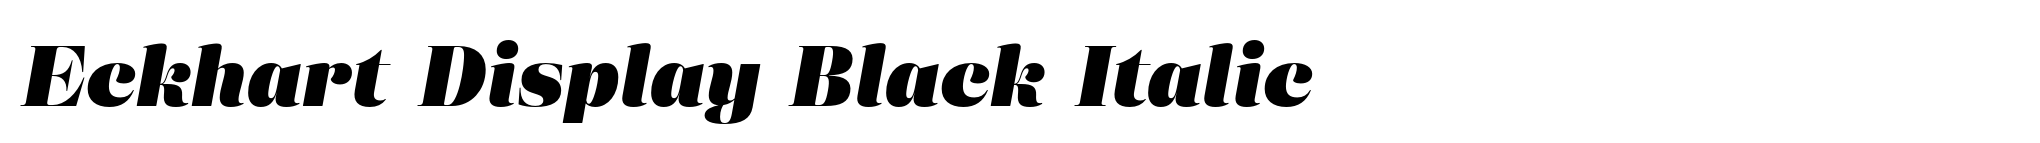 Eckhart Display Black Italic image